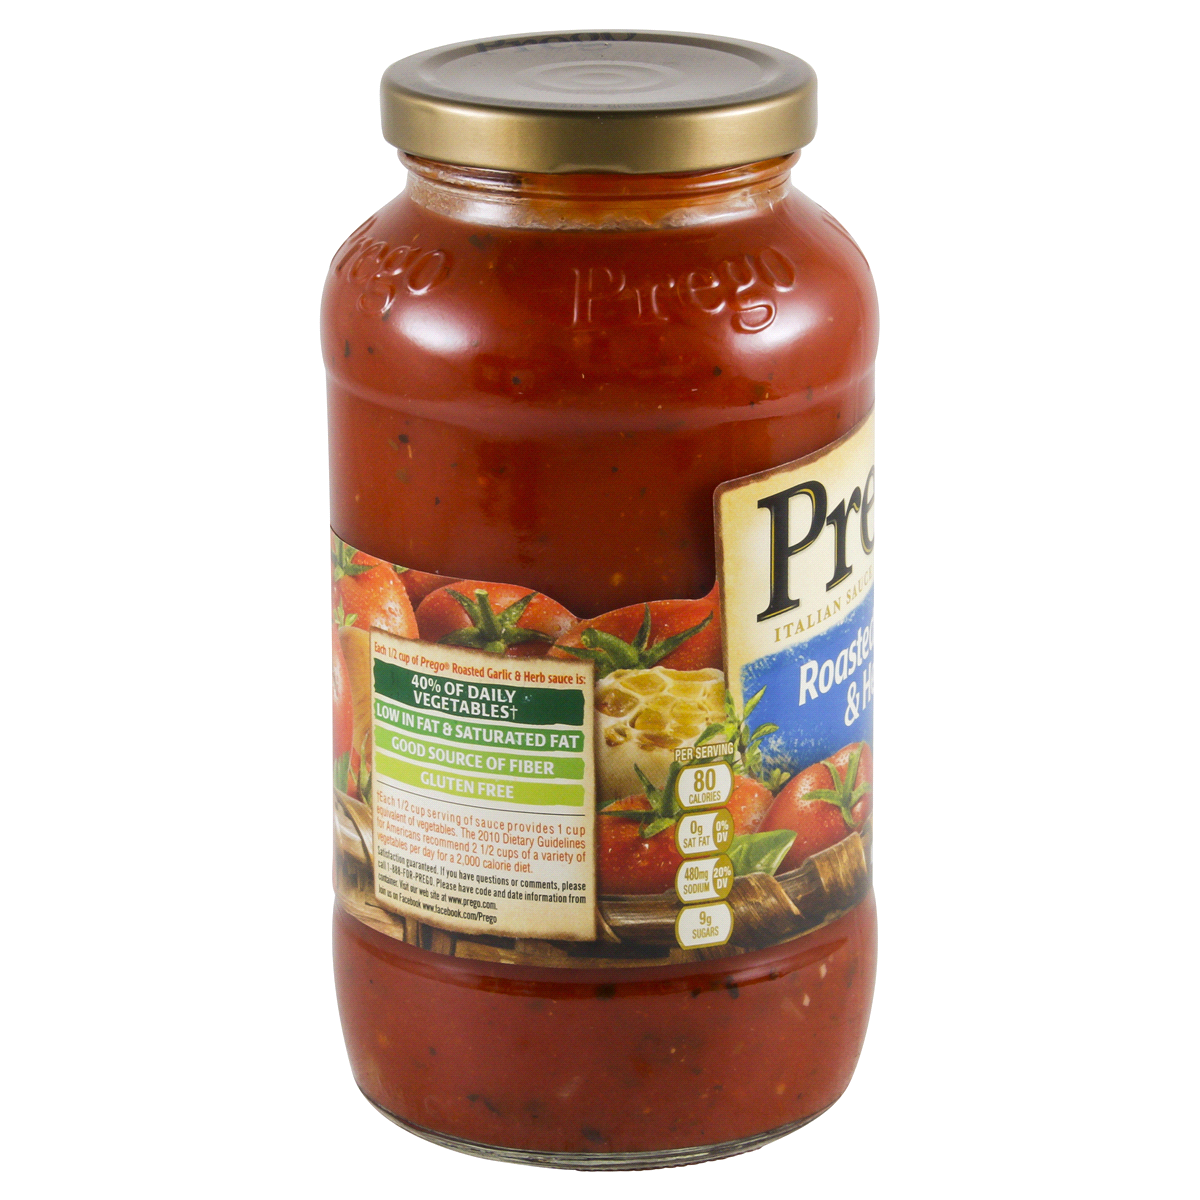 slide 25 of 90, Prego Roasted Garlic & Herb Italian Sauce, 24 oz